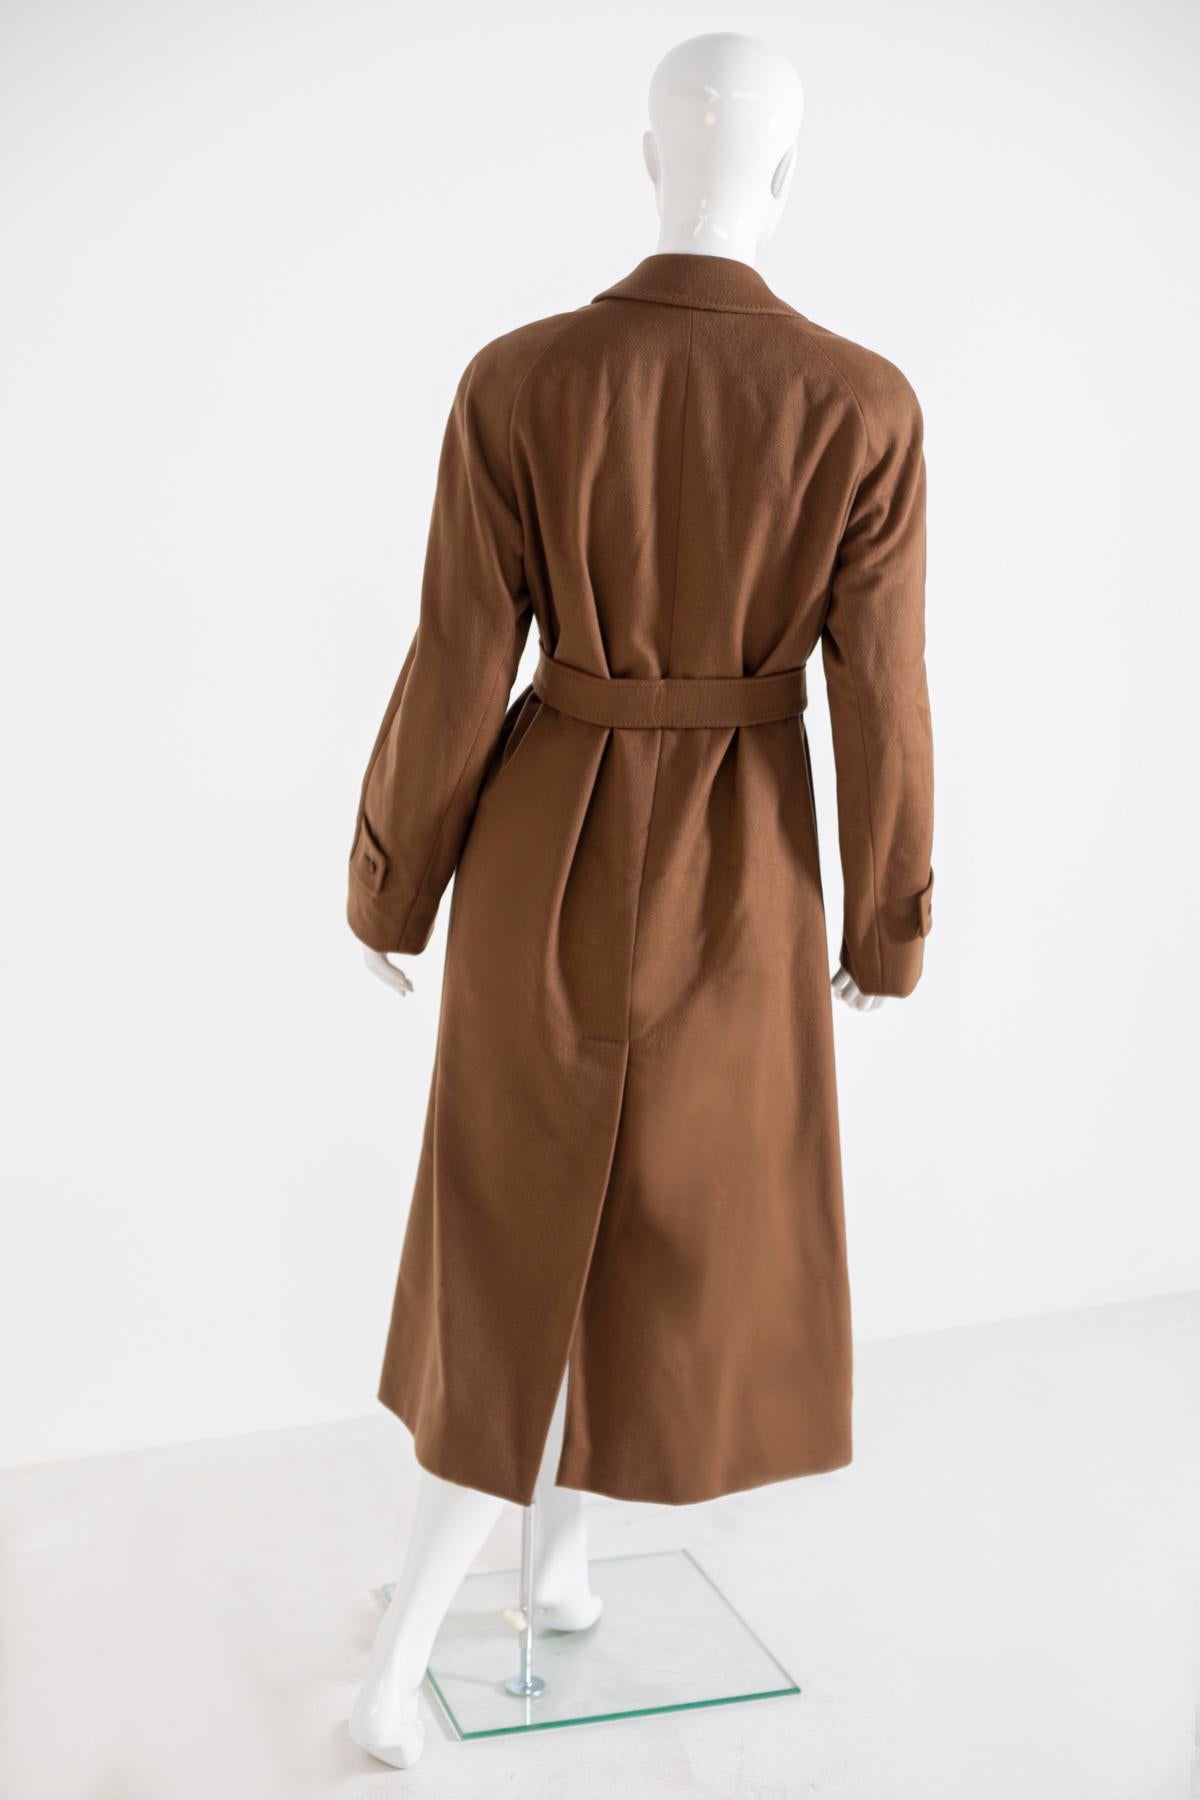 Aquascutum Women's Coat 1990s Brown-Colored For Sale 1